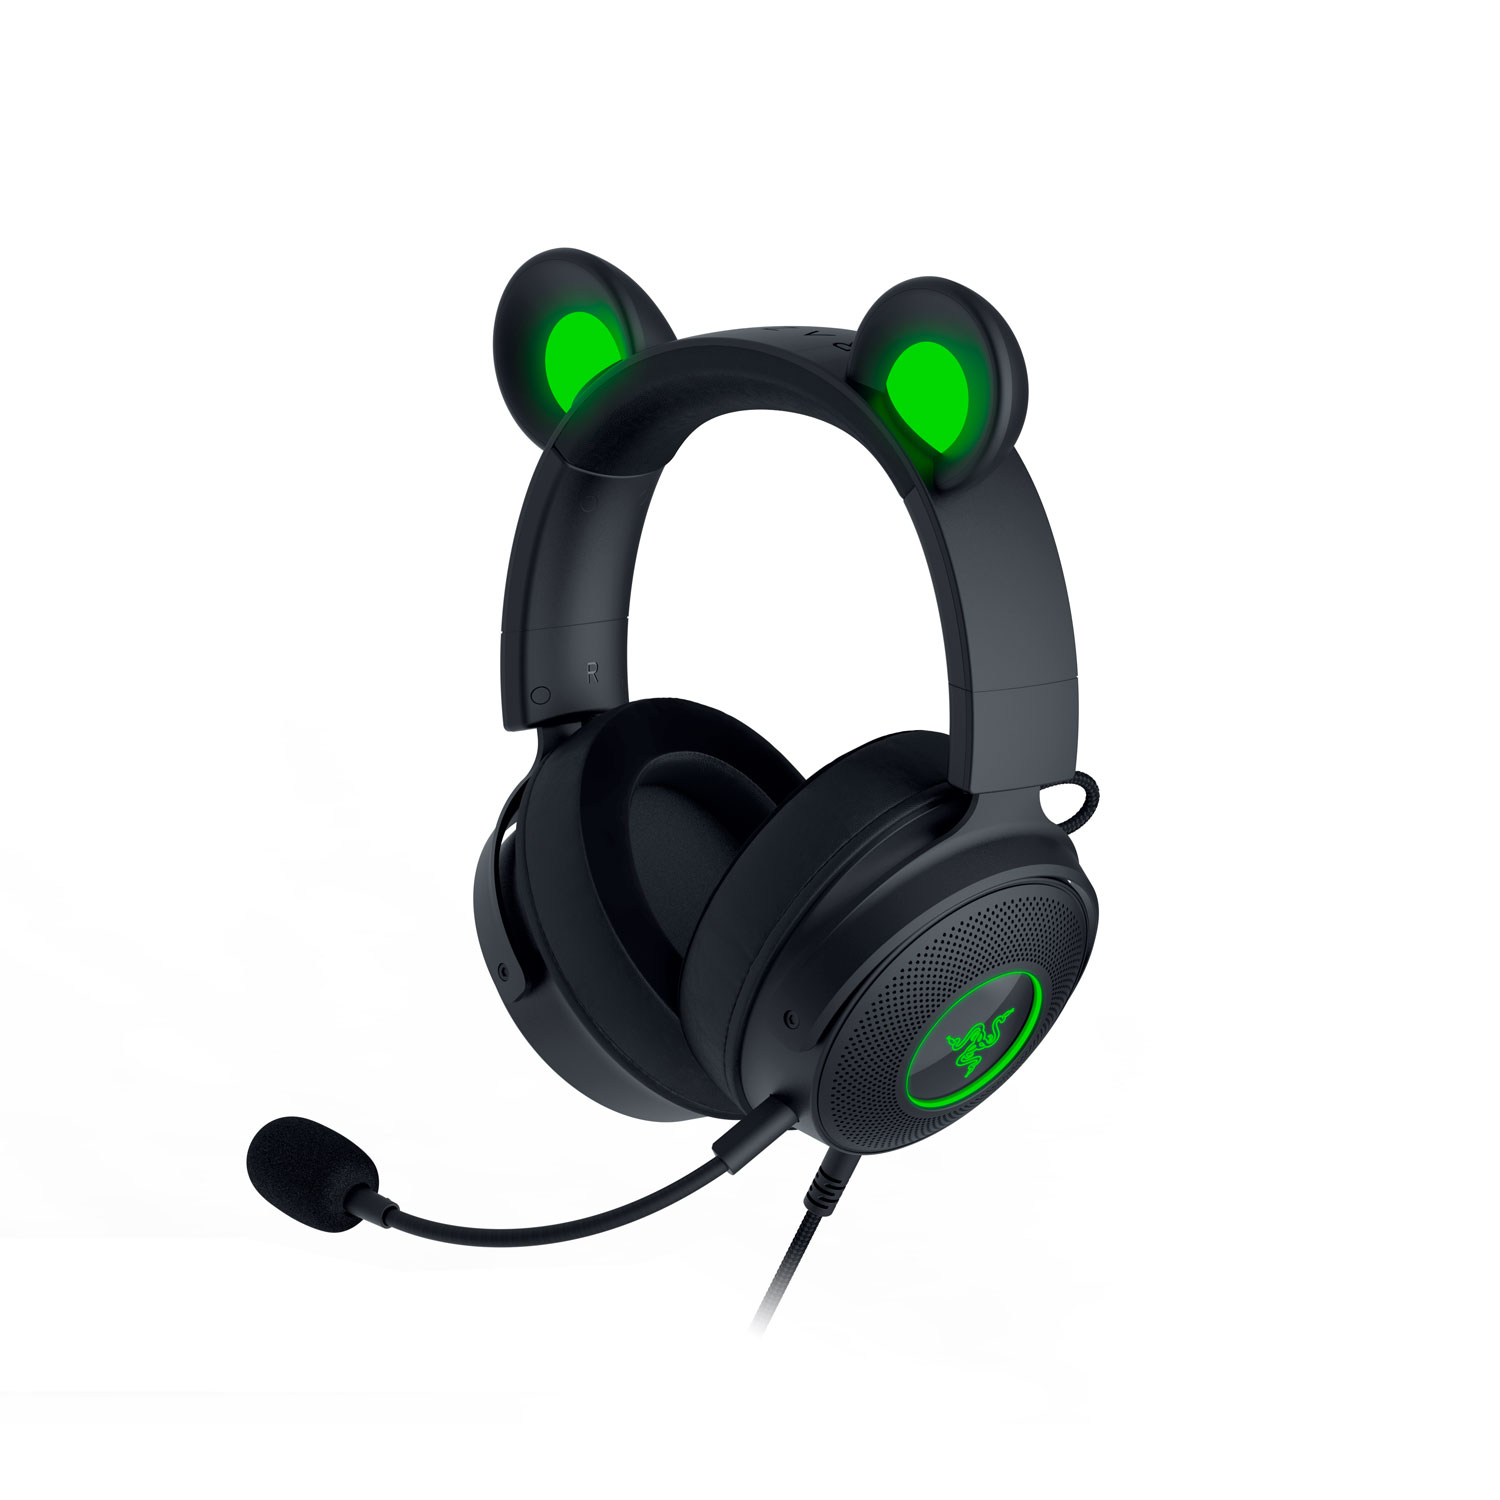 Razer Kitty V2 Pro Gaming Headphones with Microphone - Black